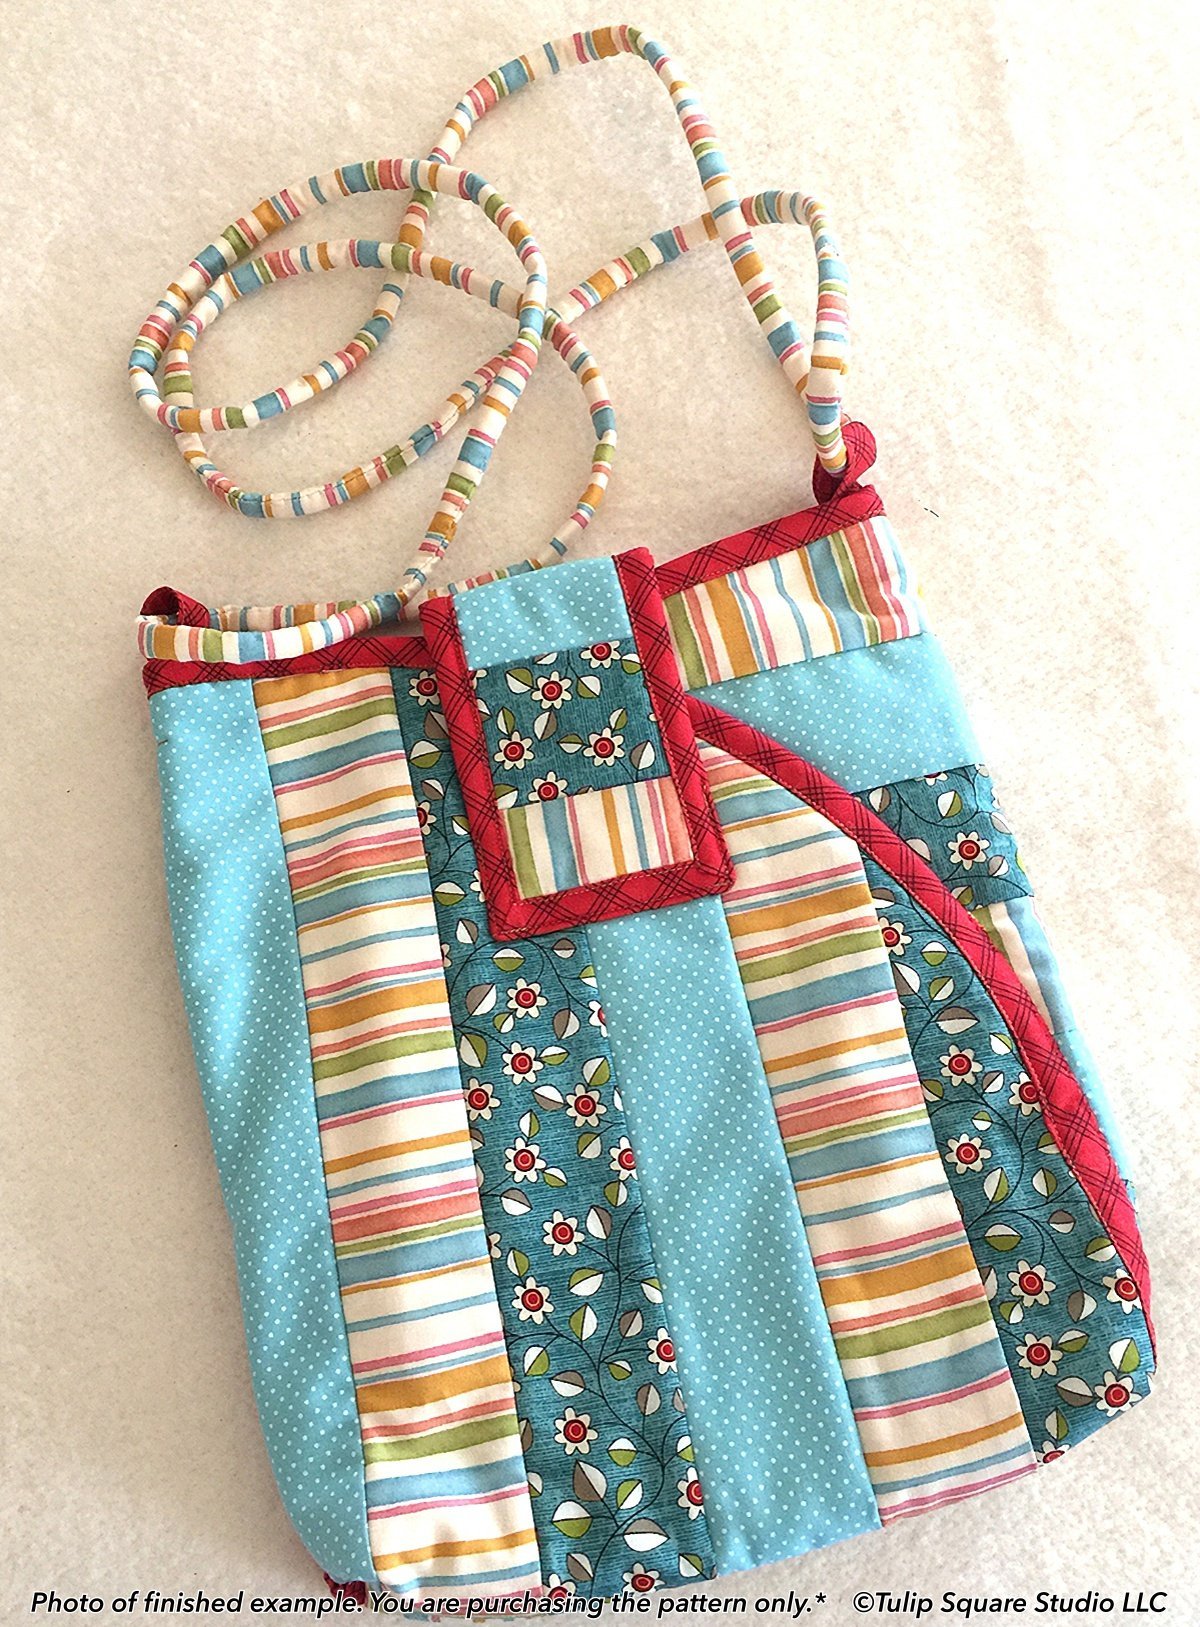 Handmade silk handbag, Embroidered women purse, Silk embroidered tote -  Studio Kokum